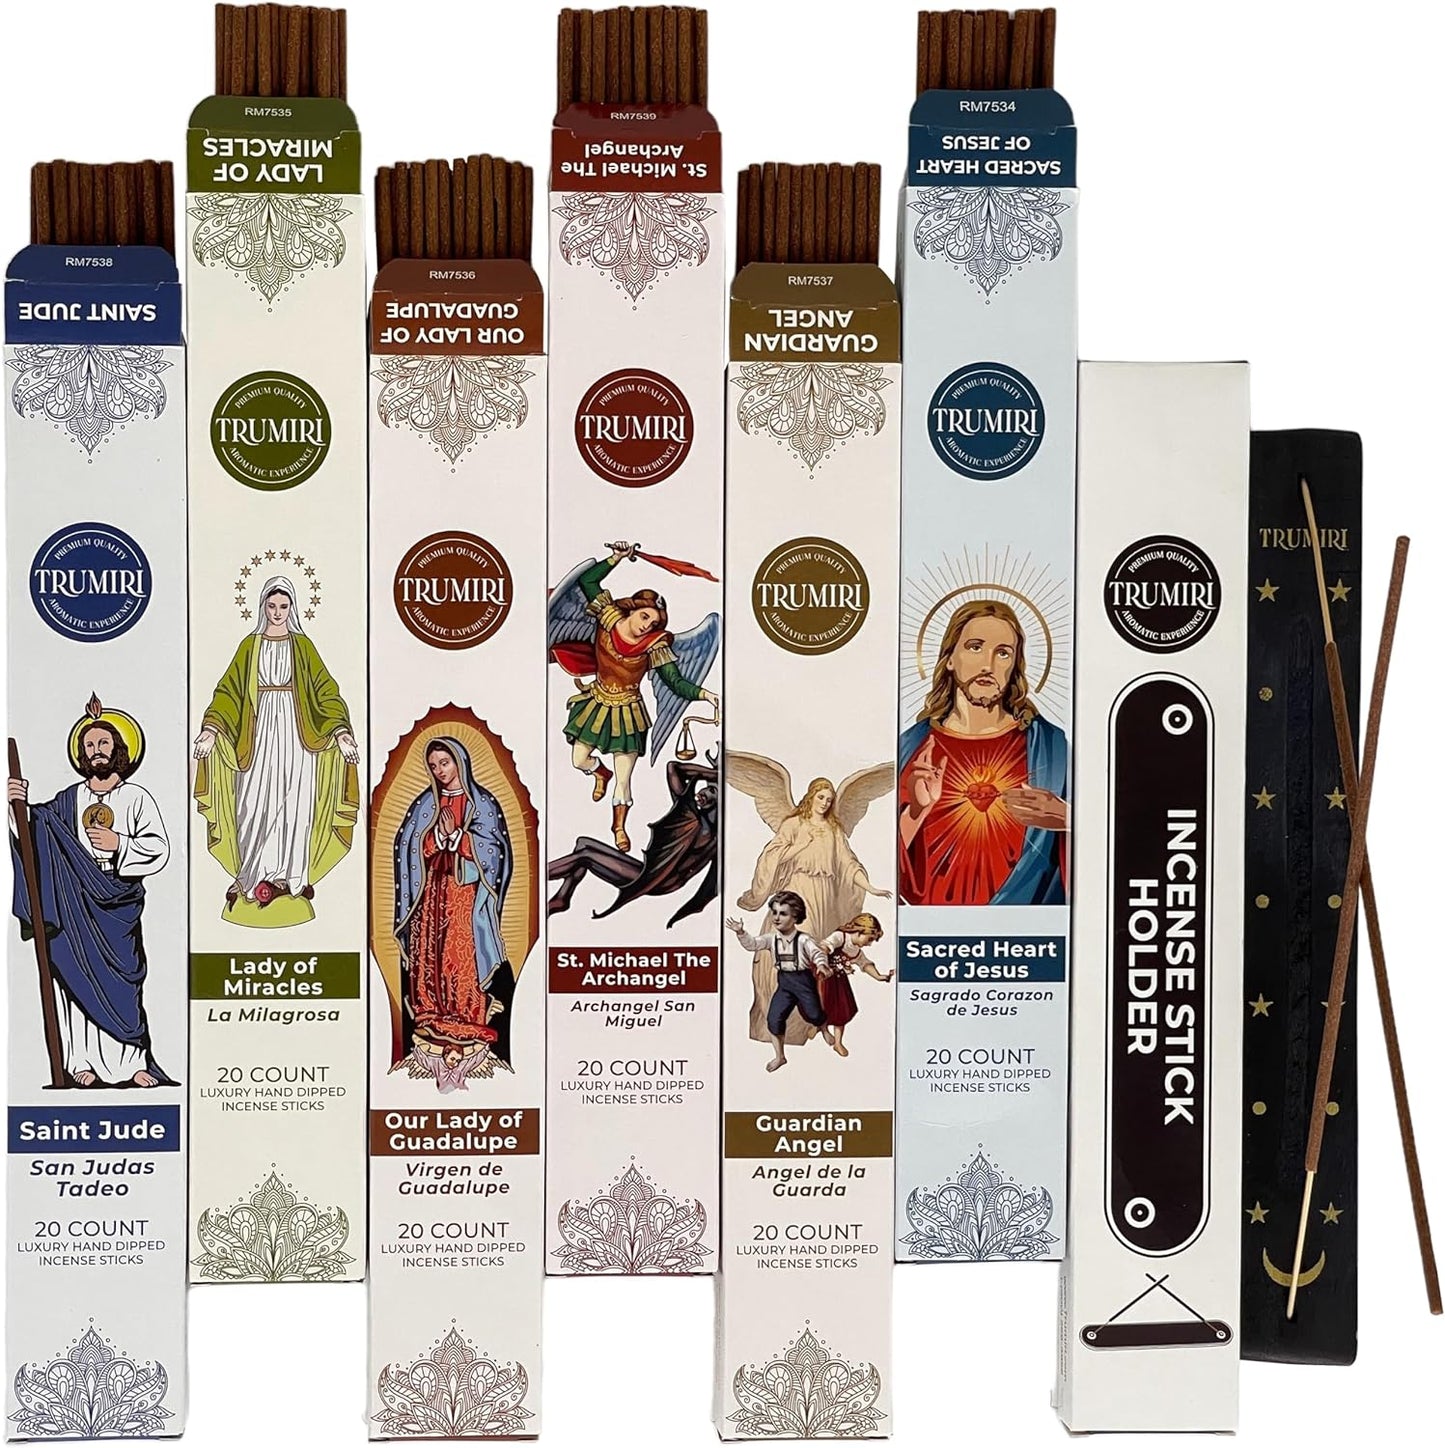 Prayer Incense Sticks Variety Pack with Incense Holder